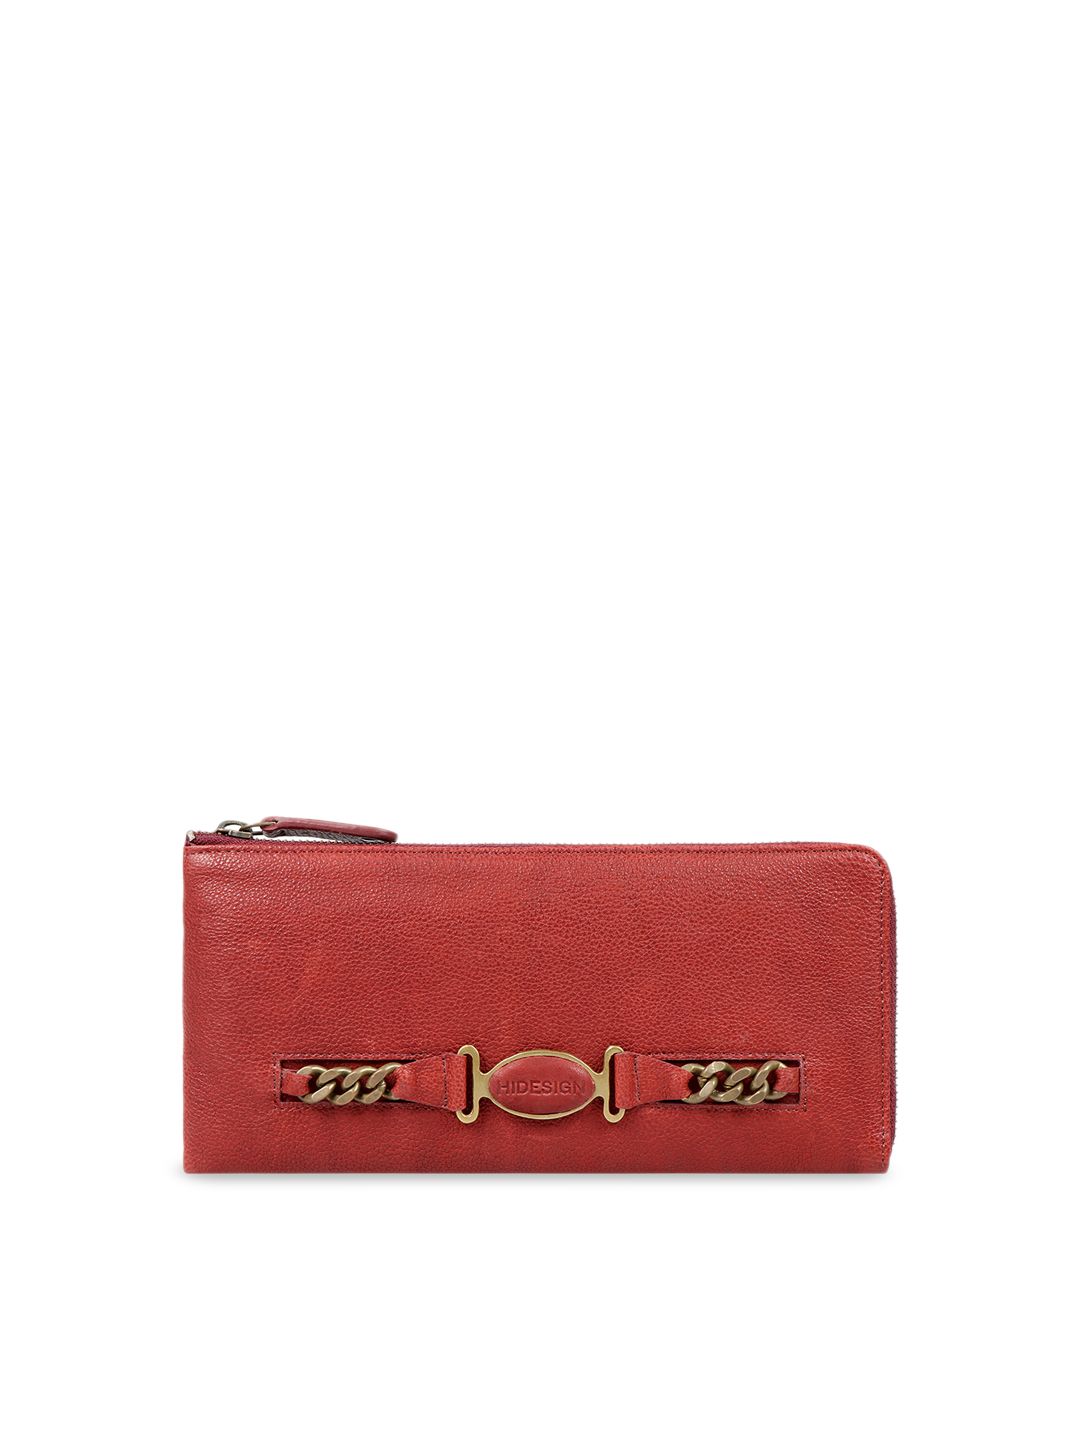 Hidesign Women Red Textured Zip Around Leather Wallet Price in India